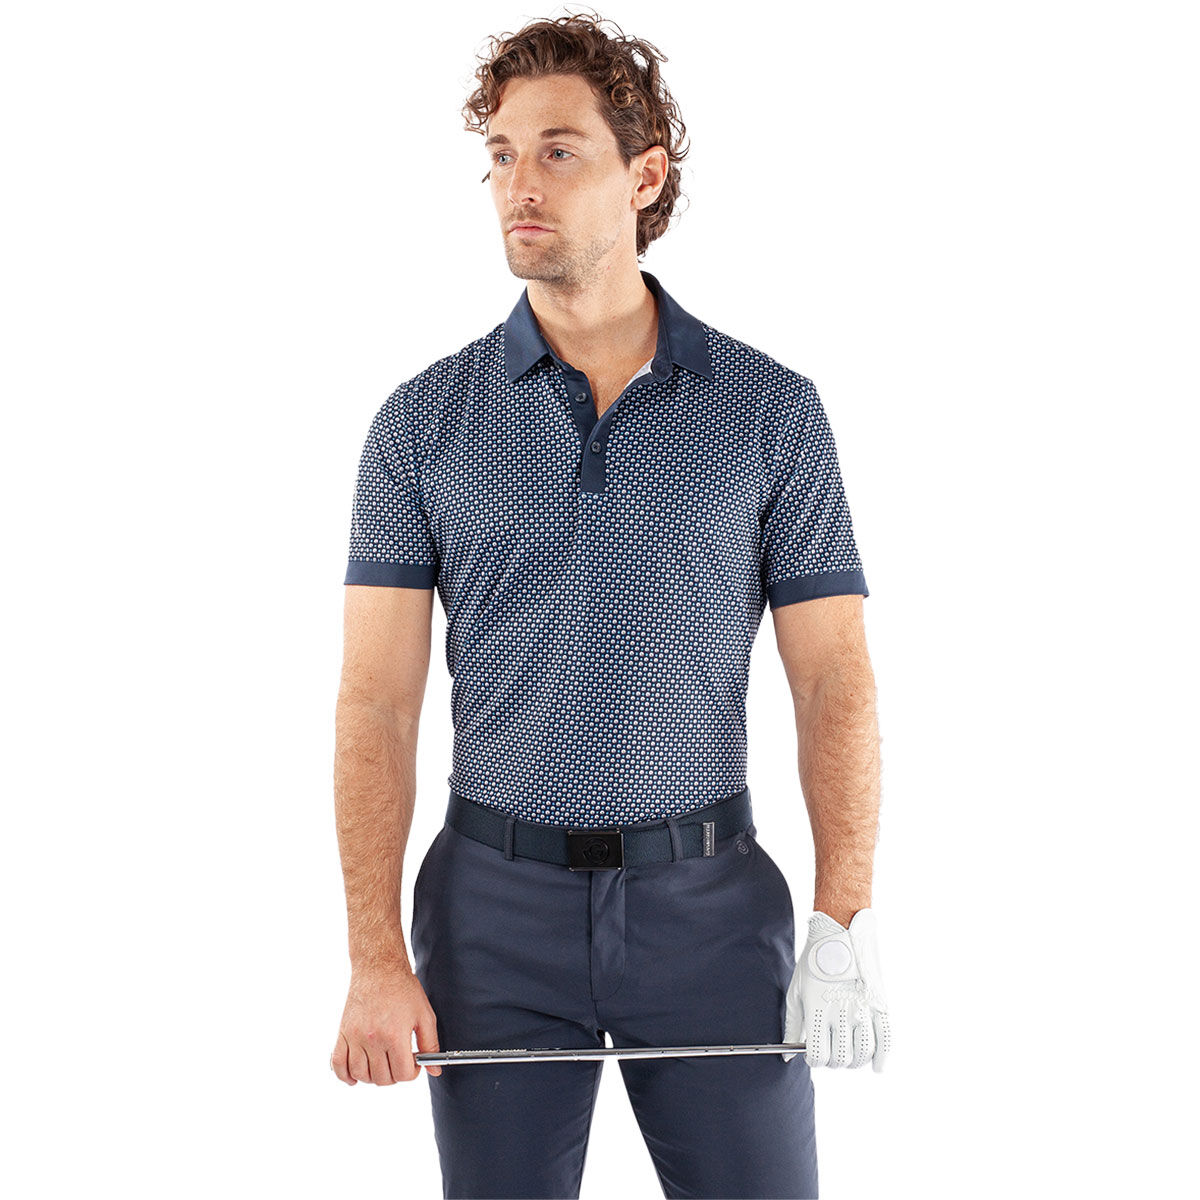 Galvin Green Men's Mate Golf Polo Shirt, Mens, Cool grey/navy, Medium | American Golf von Galvin Green